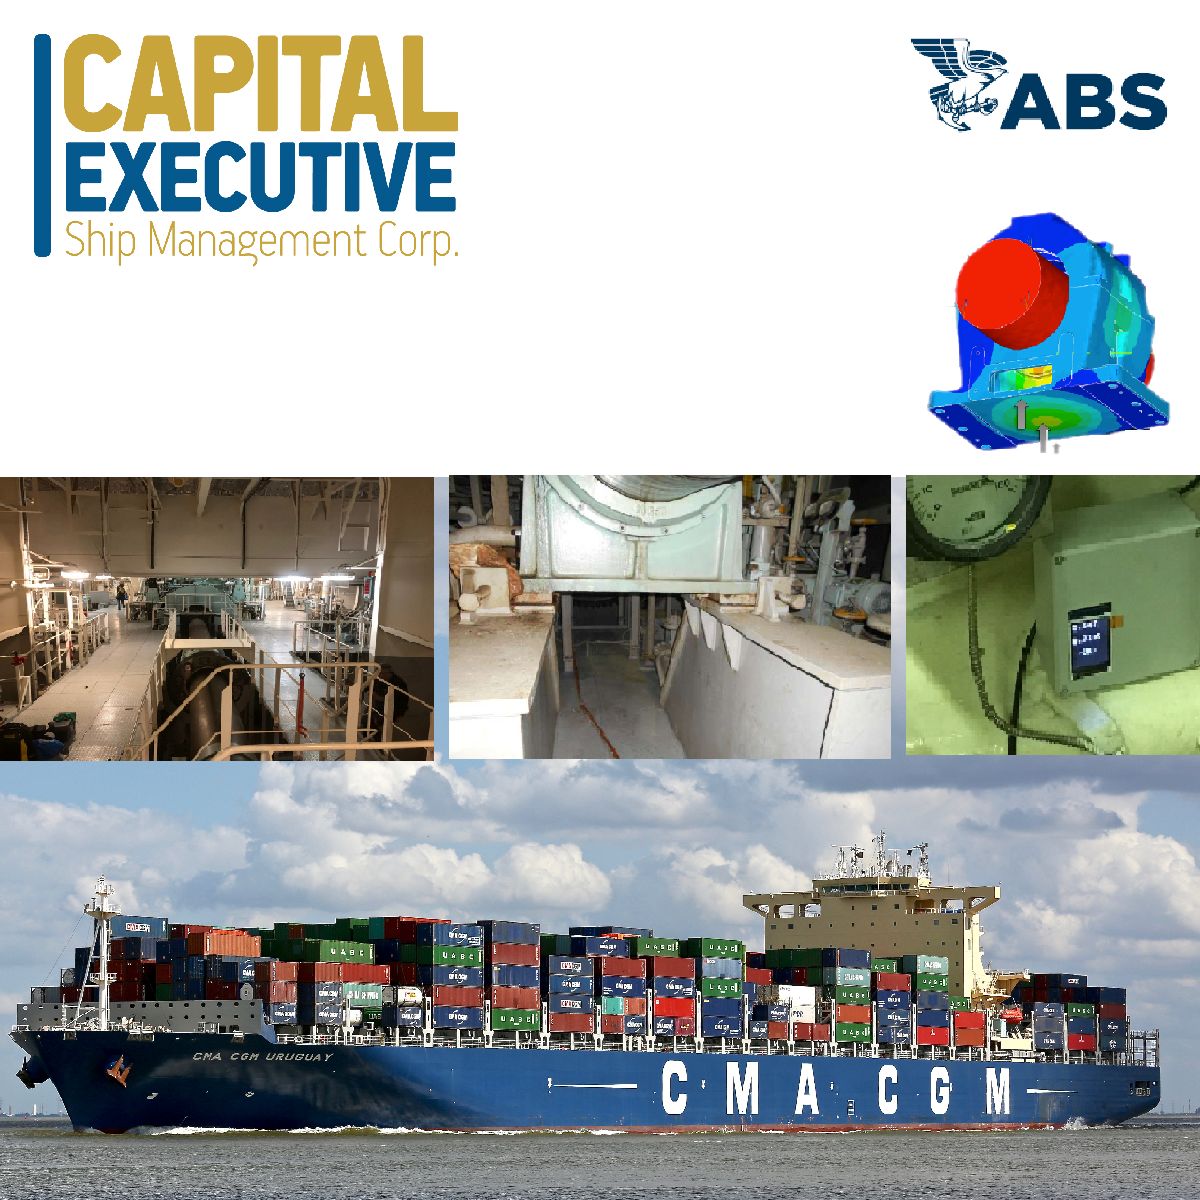 Capital Executive – Συμμετοχή στο καινοτόμο πρόγραμμα Smart Bearing σε συνεργασία με ABS, ΕΜΠ και Metrisis Ltd.